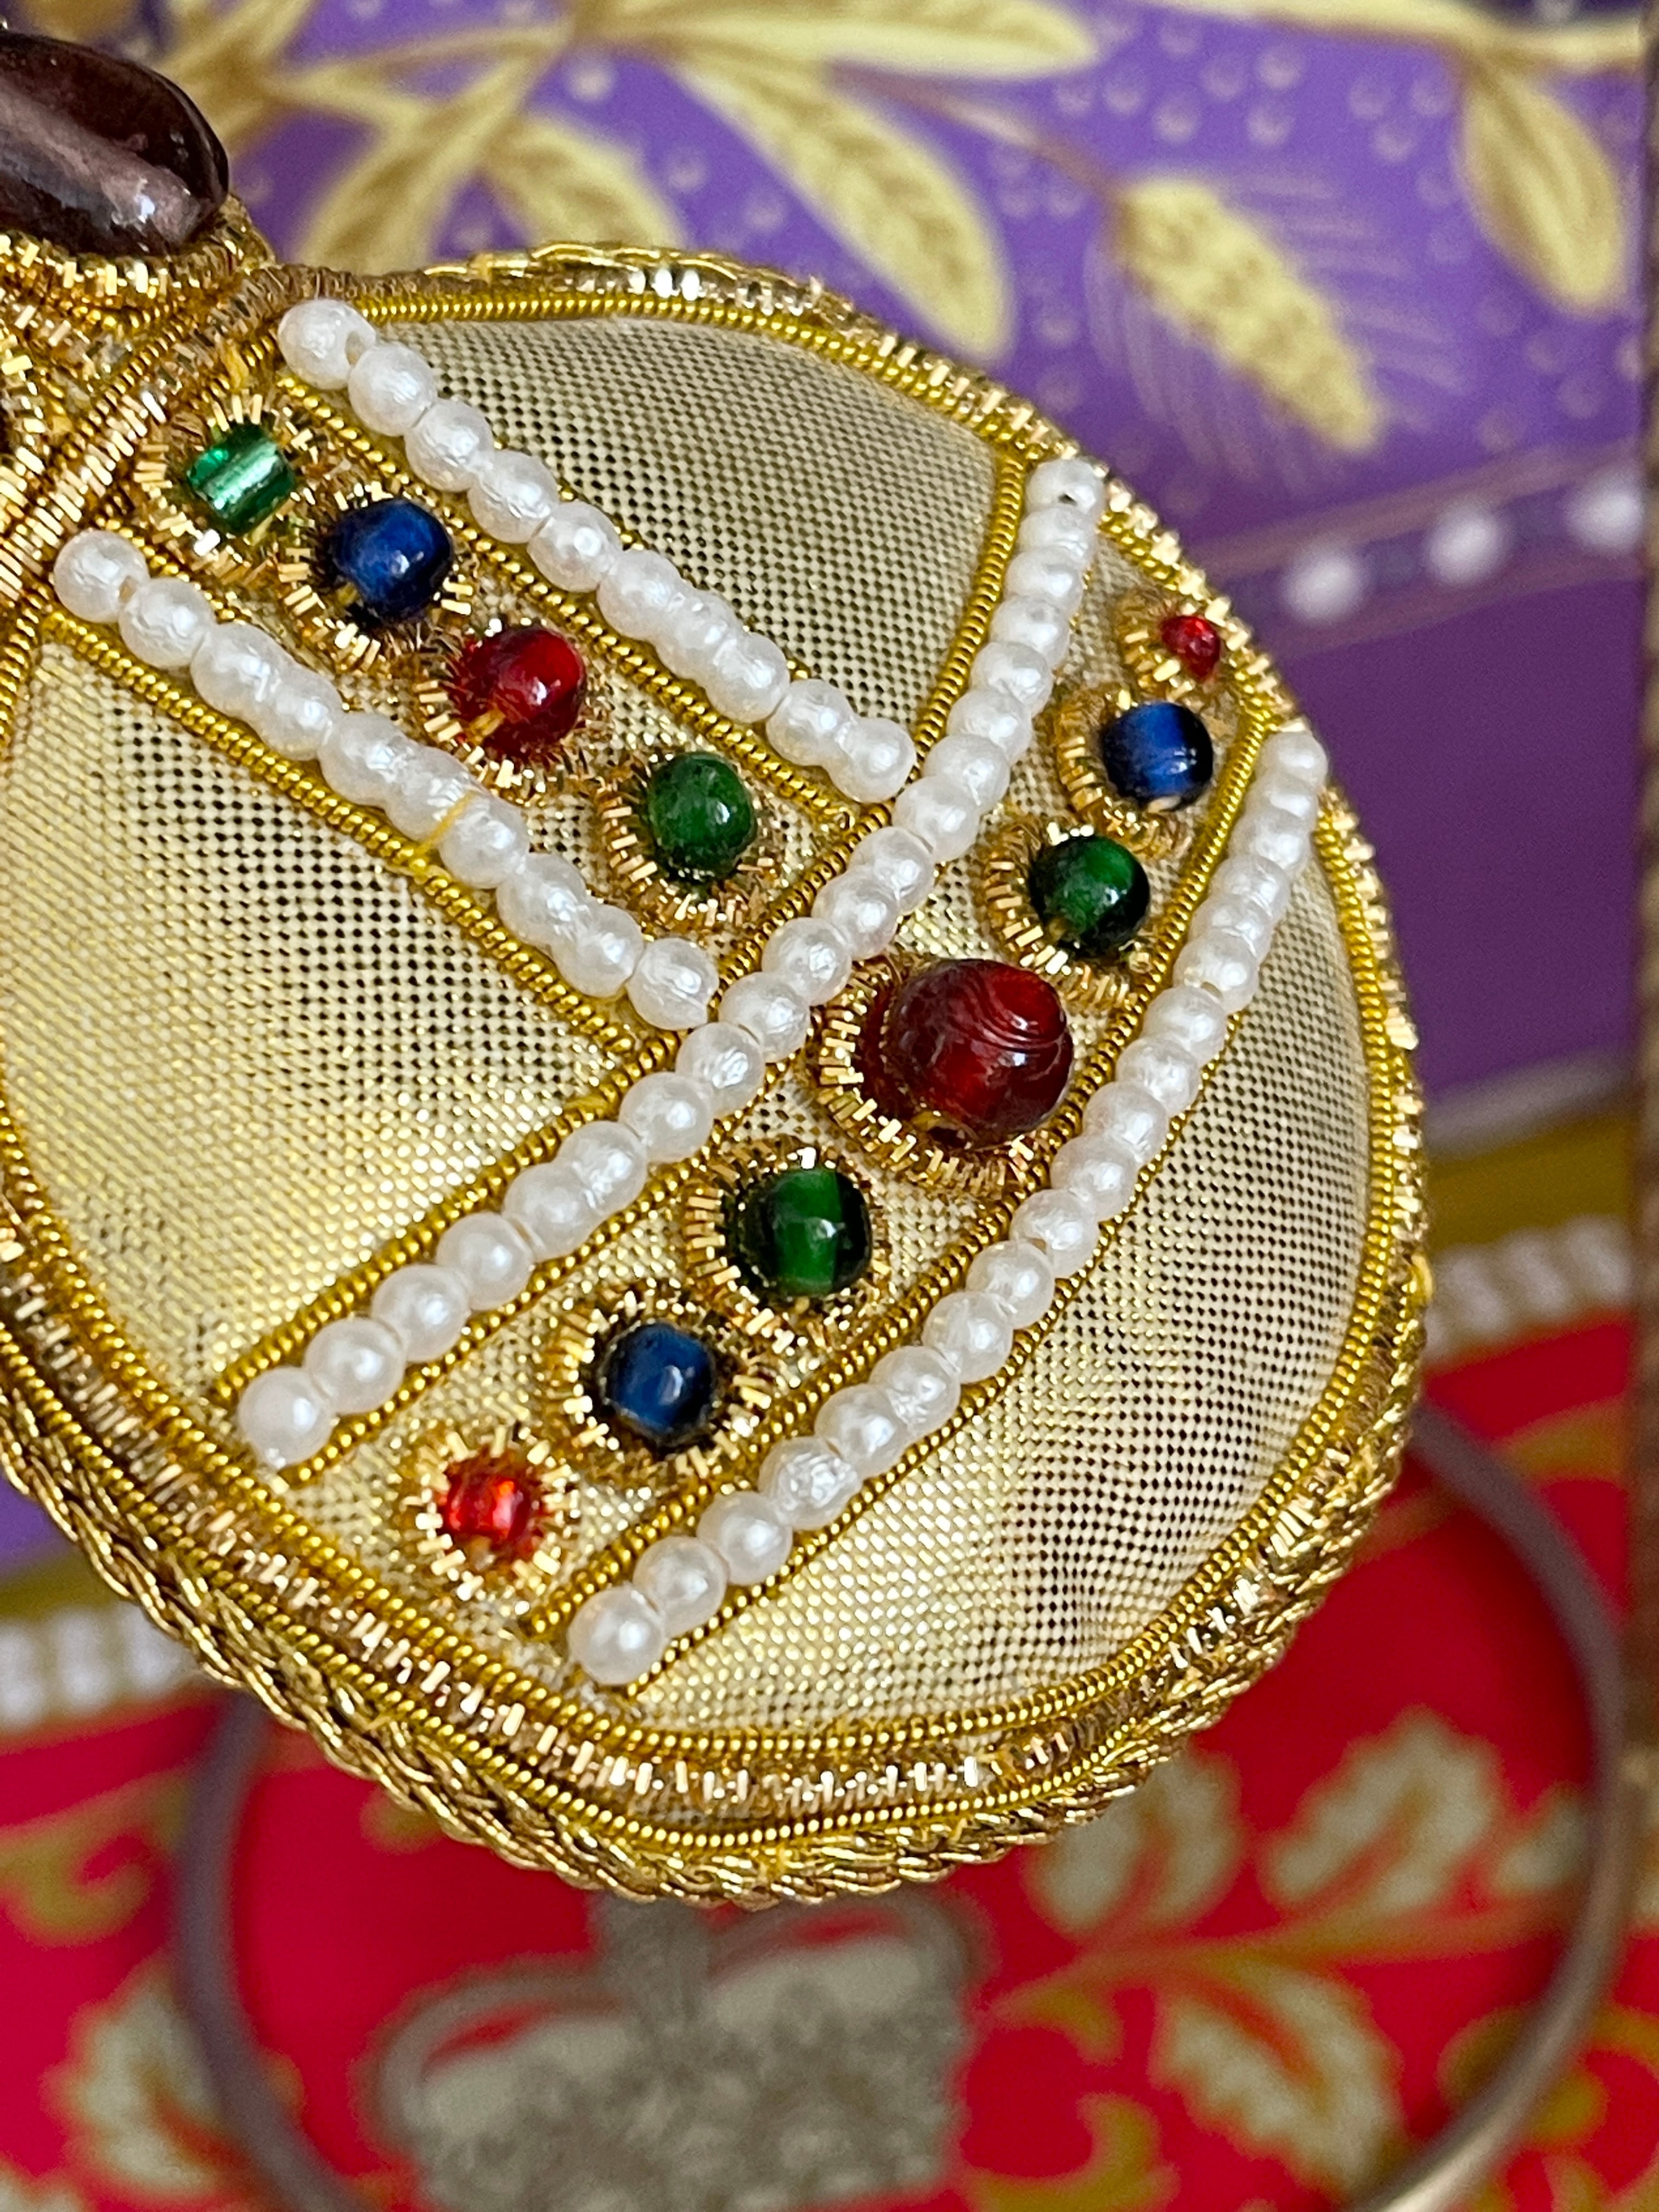 『Westminster Abbey』オーブ オーナメント Orb Decoration | Merry Unbirthday